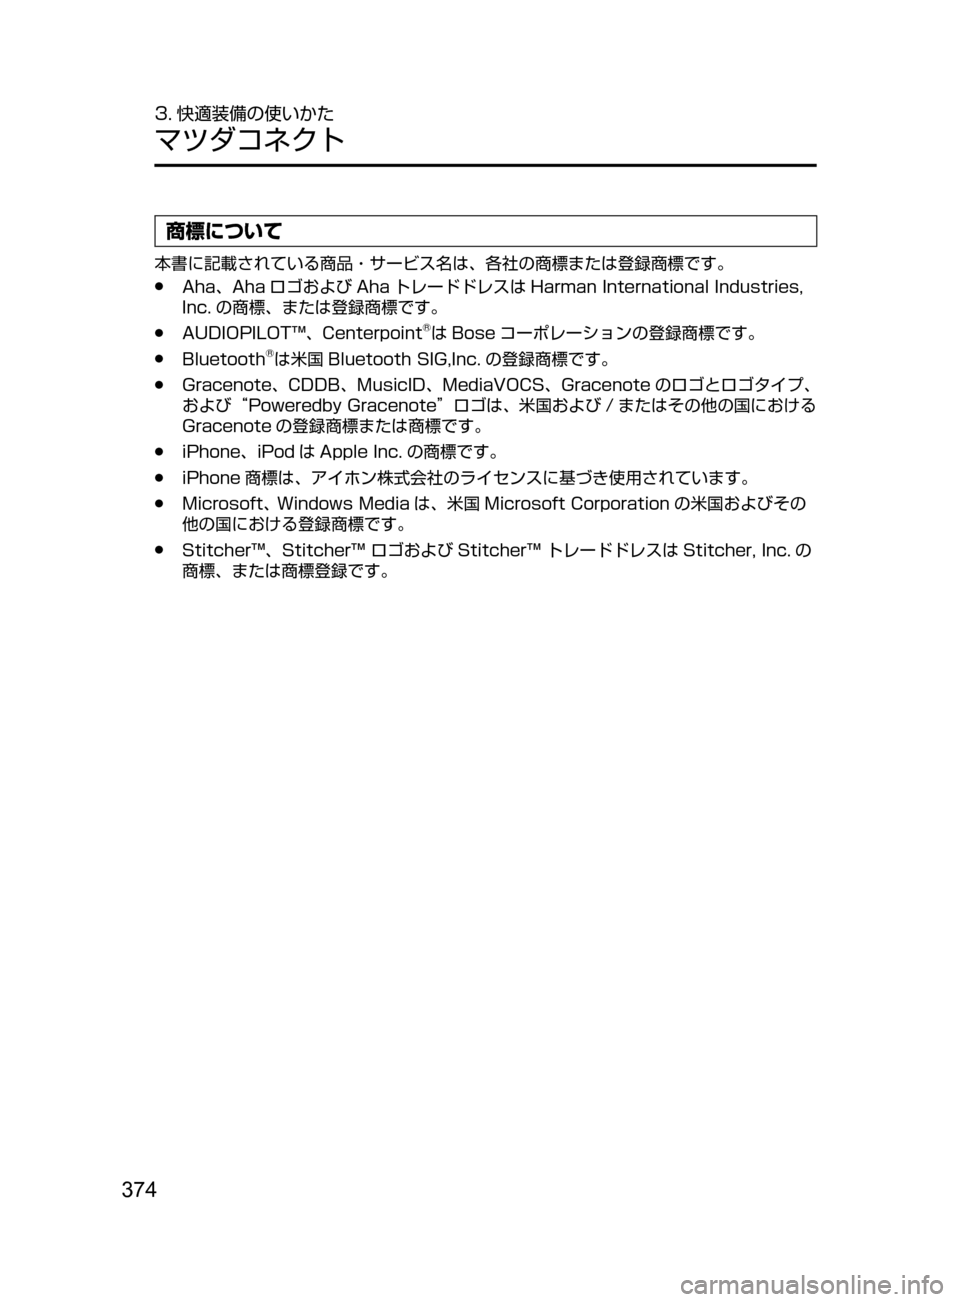 MAZDA MODEL ATENZA 2016  アテンザ｜取扱説明書 (in Japanese) 374
3. 快適装備の使いかた
マツダコネクト
商標について
本書に記載されている商品・サービス名は、各社の商標または登録商標です。
﻿﻿●Aha､ Ah